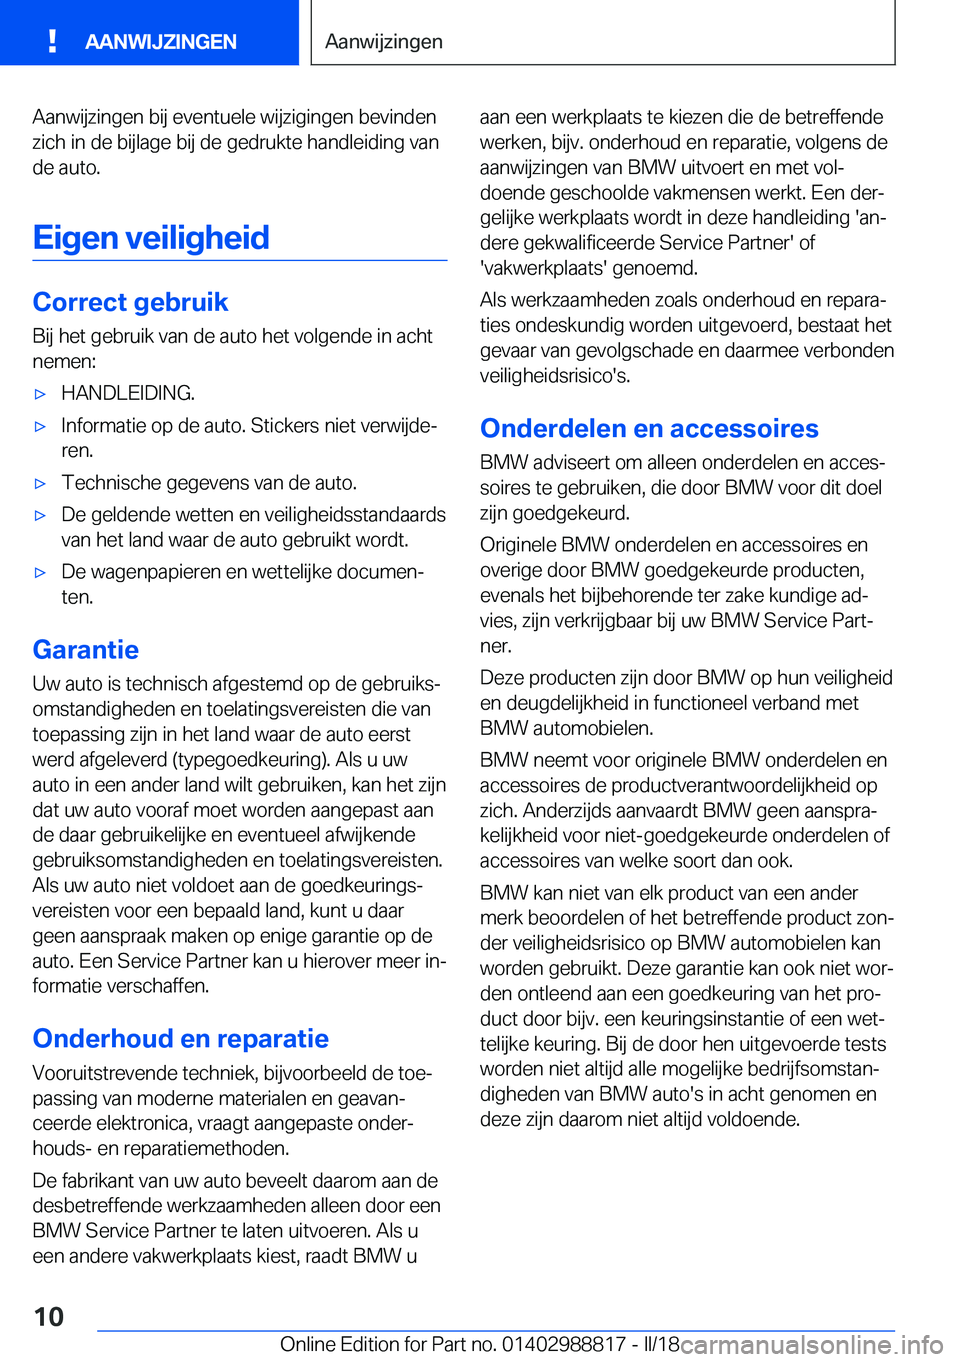 BMW X5 2018  Instructieboekjes (in Dutch) �A�a�n�w�i�j�z�i�n�g�e�n� �b�i�j� �e�v�e�n�t�u�e�l�e� �w�i�j�z�i�g�i�n�g�e�n� �b�e�v�i�n�d�e�n�z�i�c�h� �i�n� �d�e� �b�i�j�l�a�g�e� �b�i�j� �d�e� �g�e�d�r�u�k�t�e� �h�a�n�d�l�e�i�d�i�n�g� �v�a�n
�d�e�